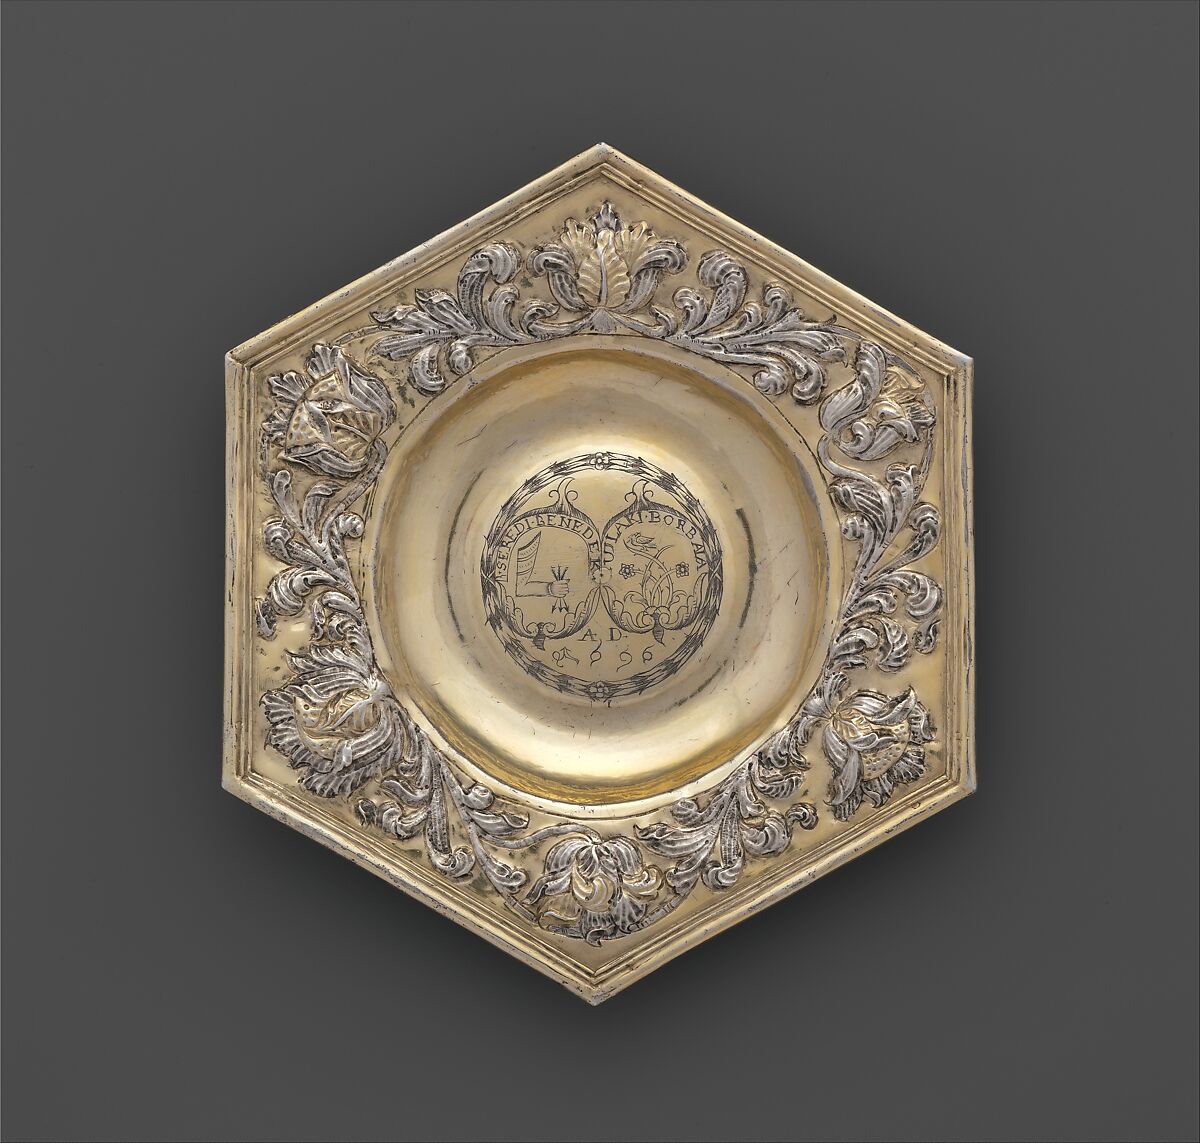 Hexagonal dish, Silver, partly gilded, Hungarian, Transylvania 